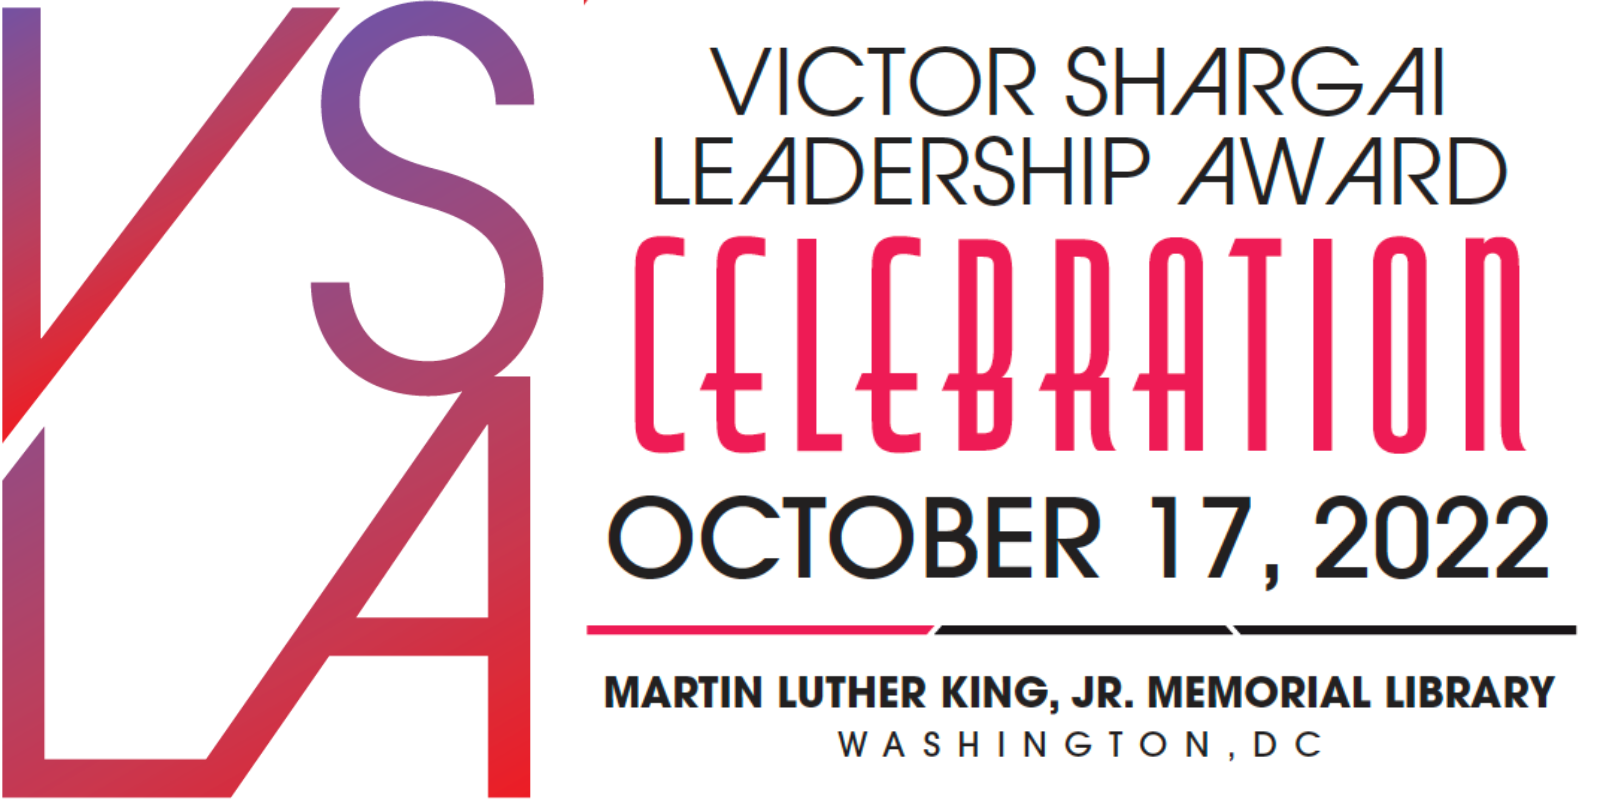 Victor Shargai Leadership Award Celebration october 17 2022 martin luther king jr memorial library washington dc